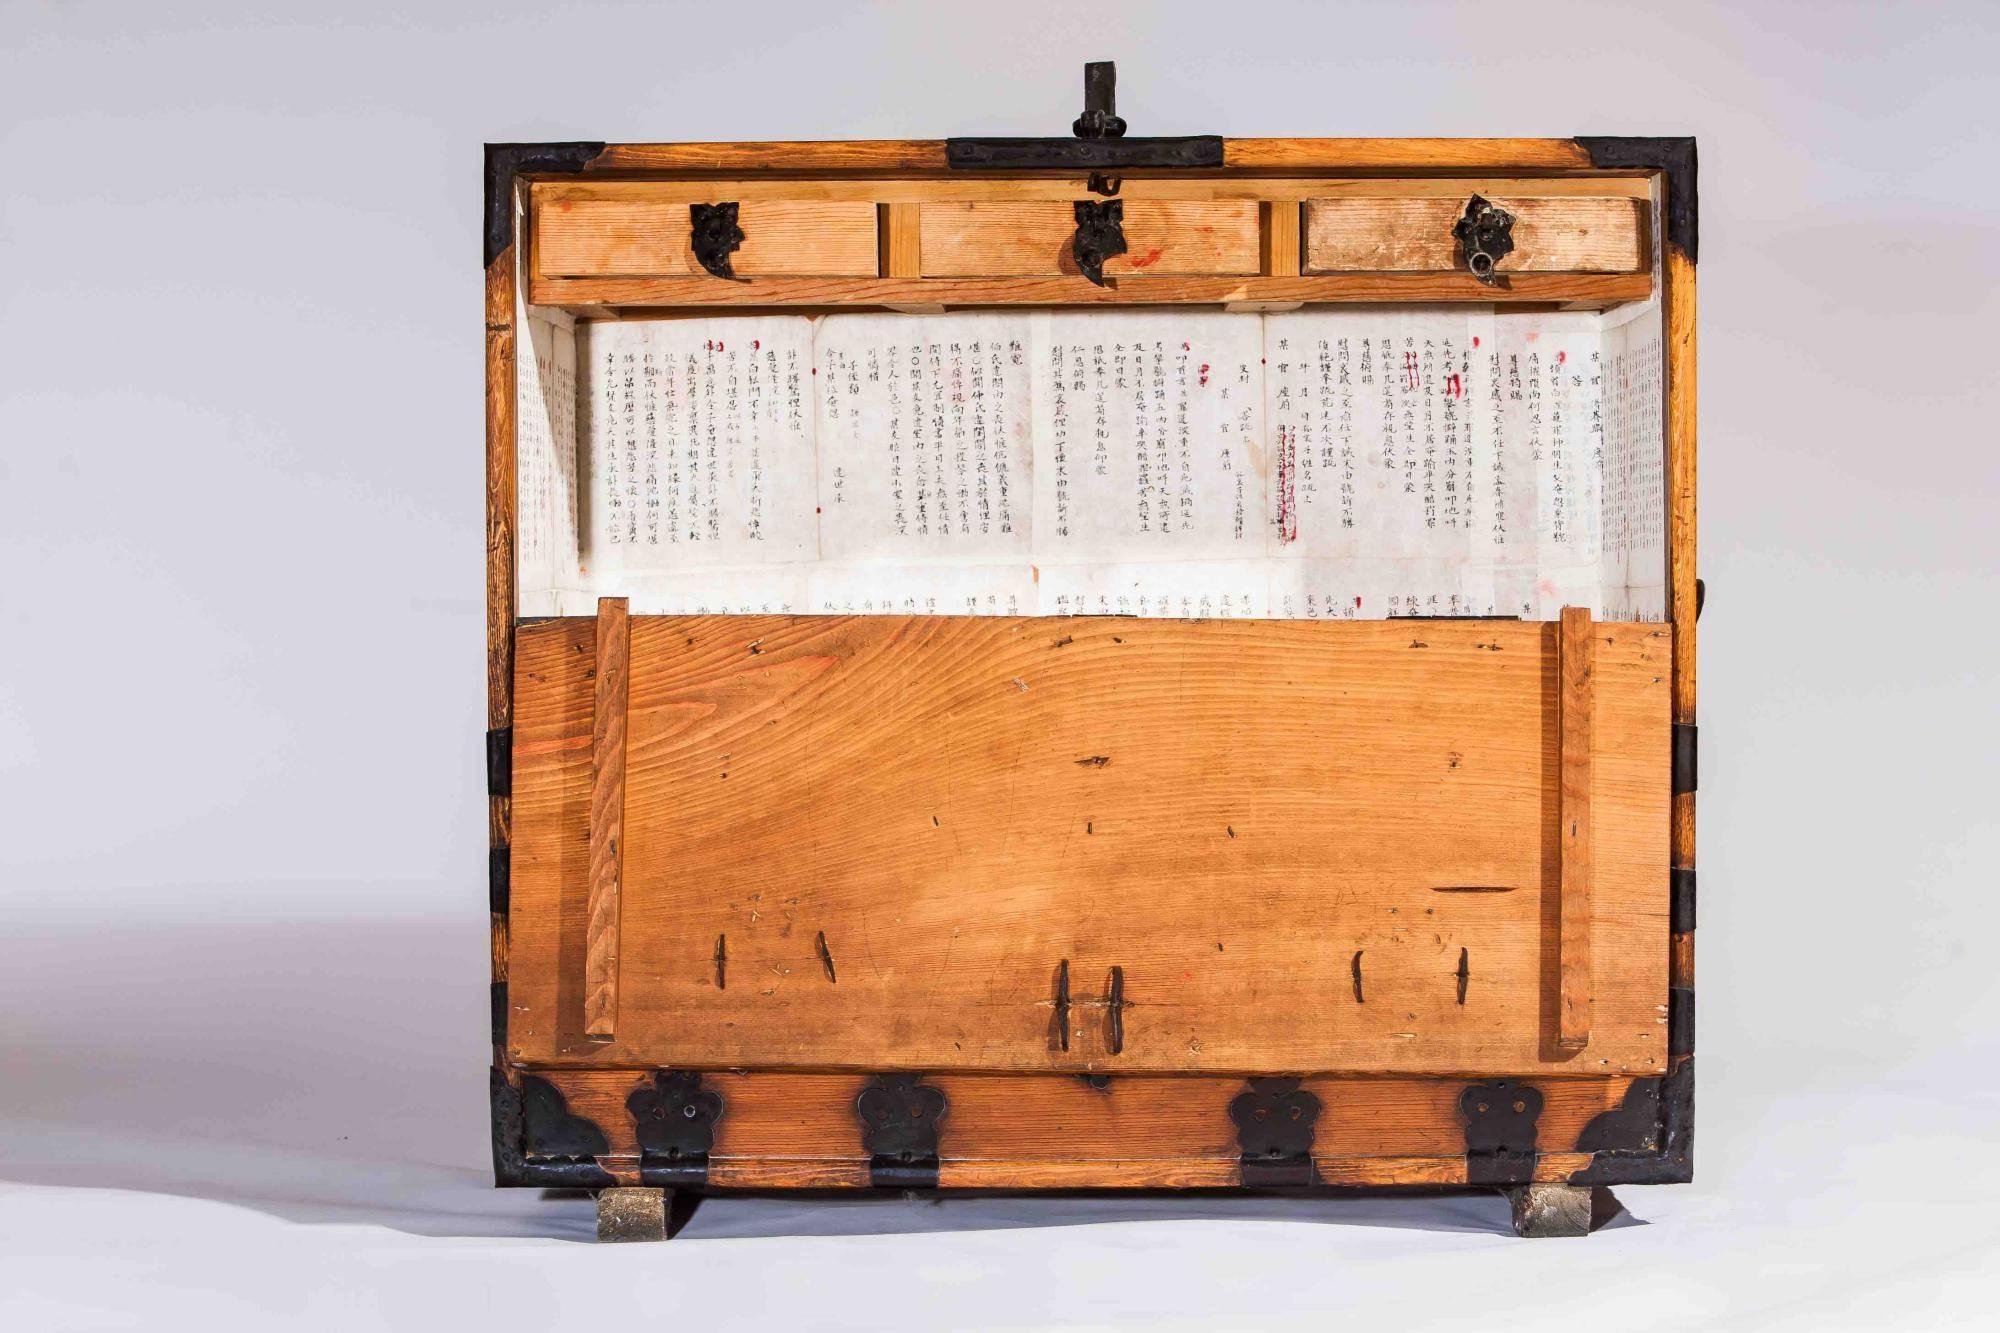 Blanket storage chest (Bandaji)
Material: Pine 
Origin: Korea
Age: Yi dynasty, circa 1860
Size: 14.5